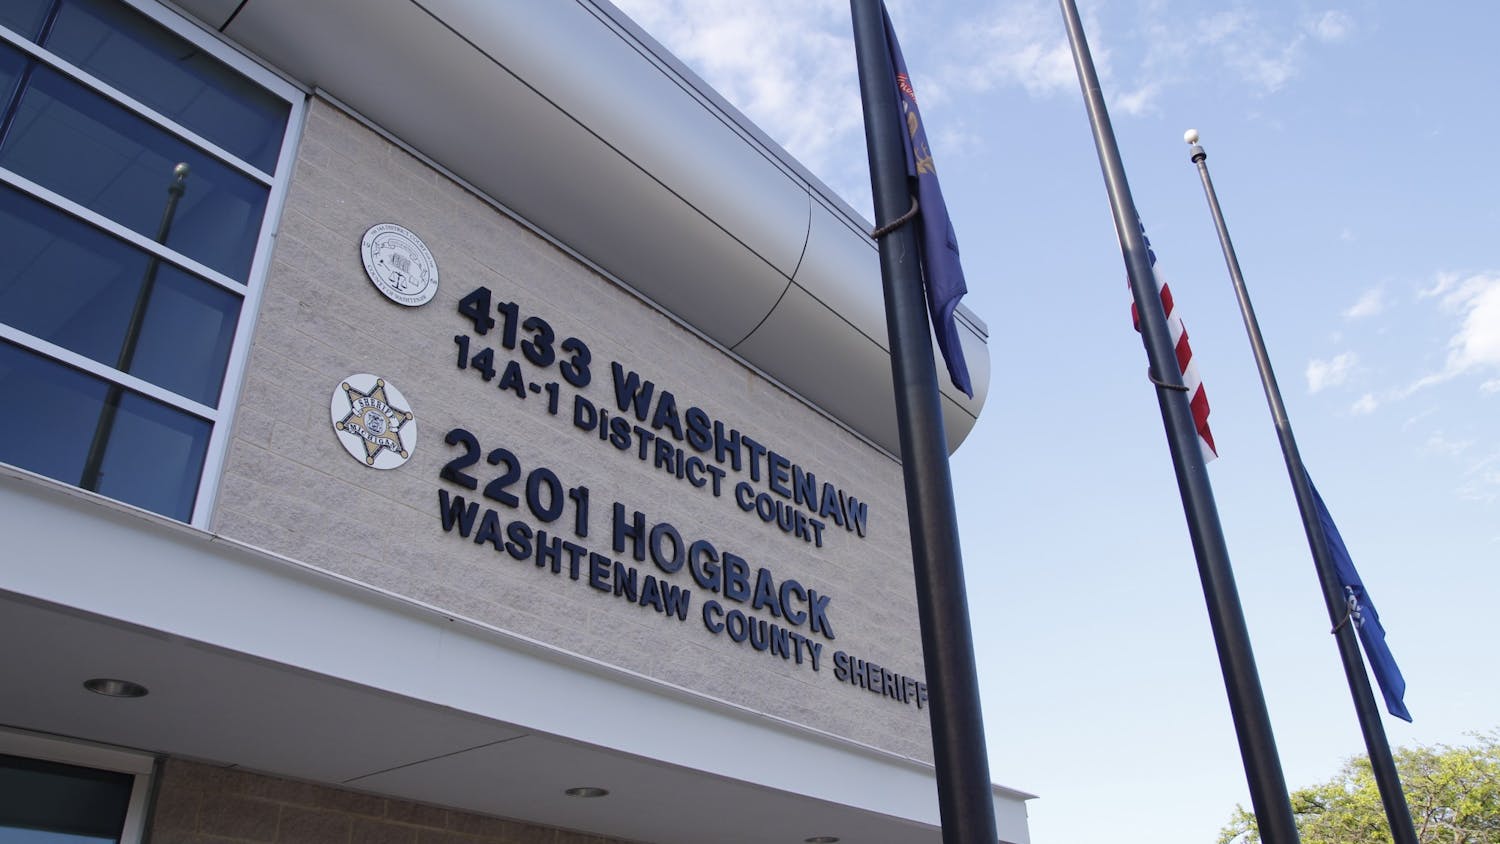 Washtenaw County Sheriff Office_03